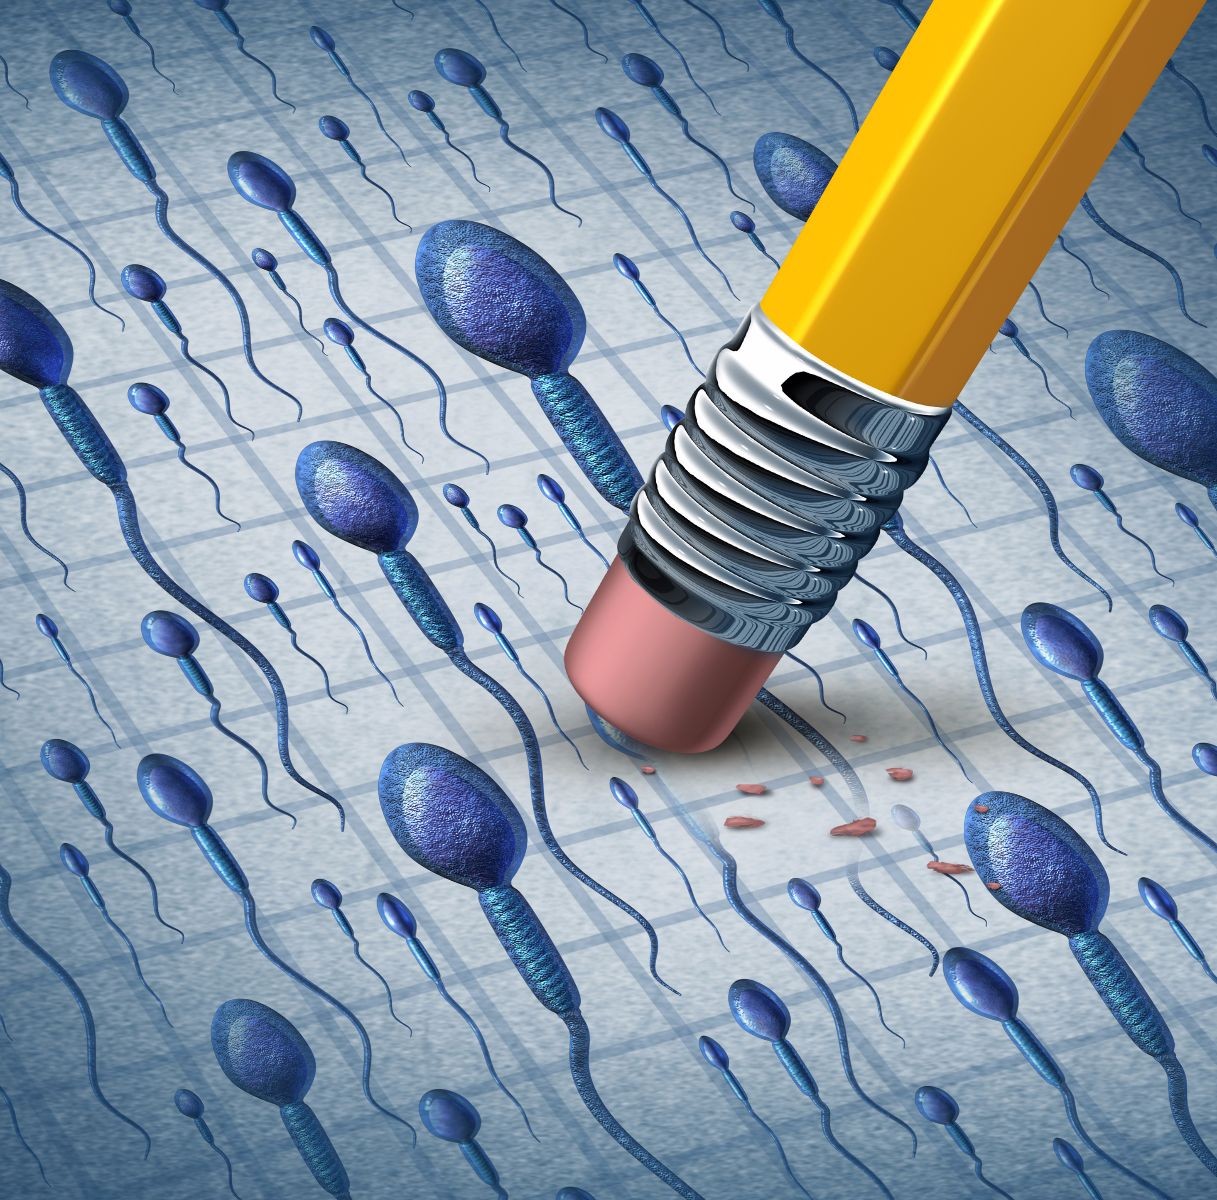 Ilustración de espermatozoides